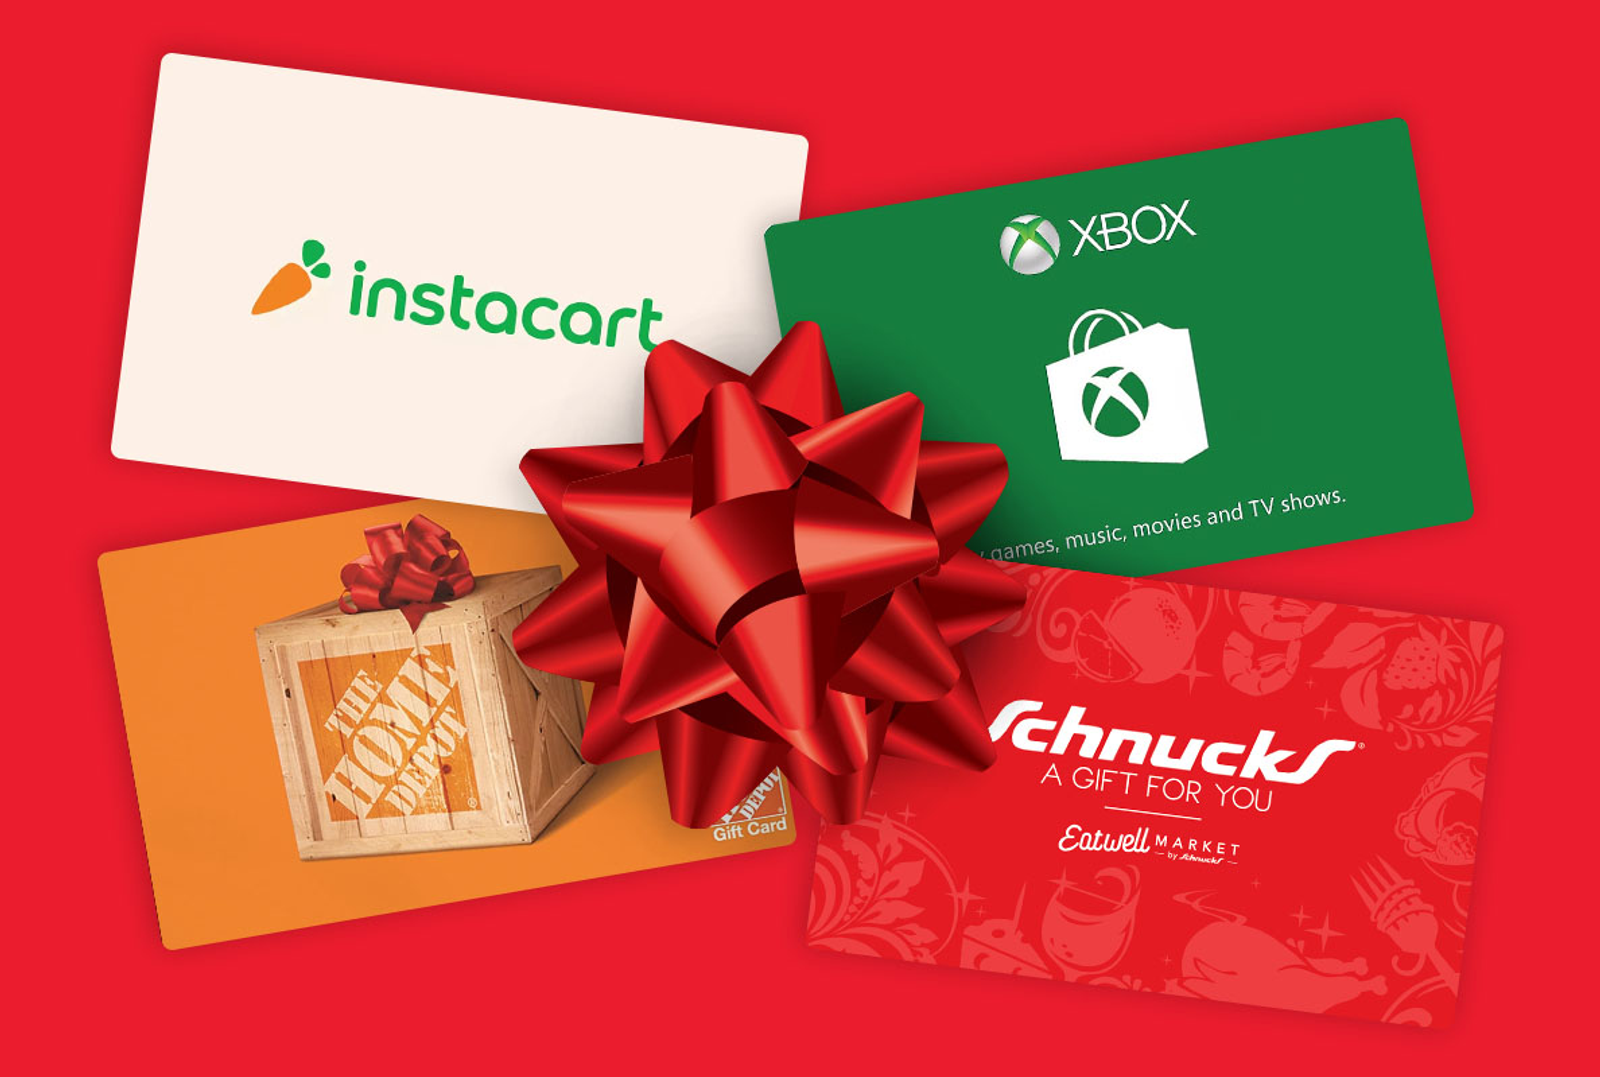 Send Digital Gift Cards in Bulk for Free